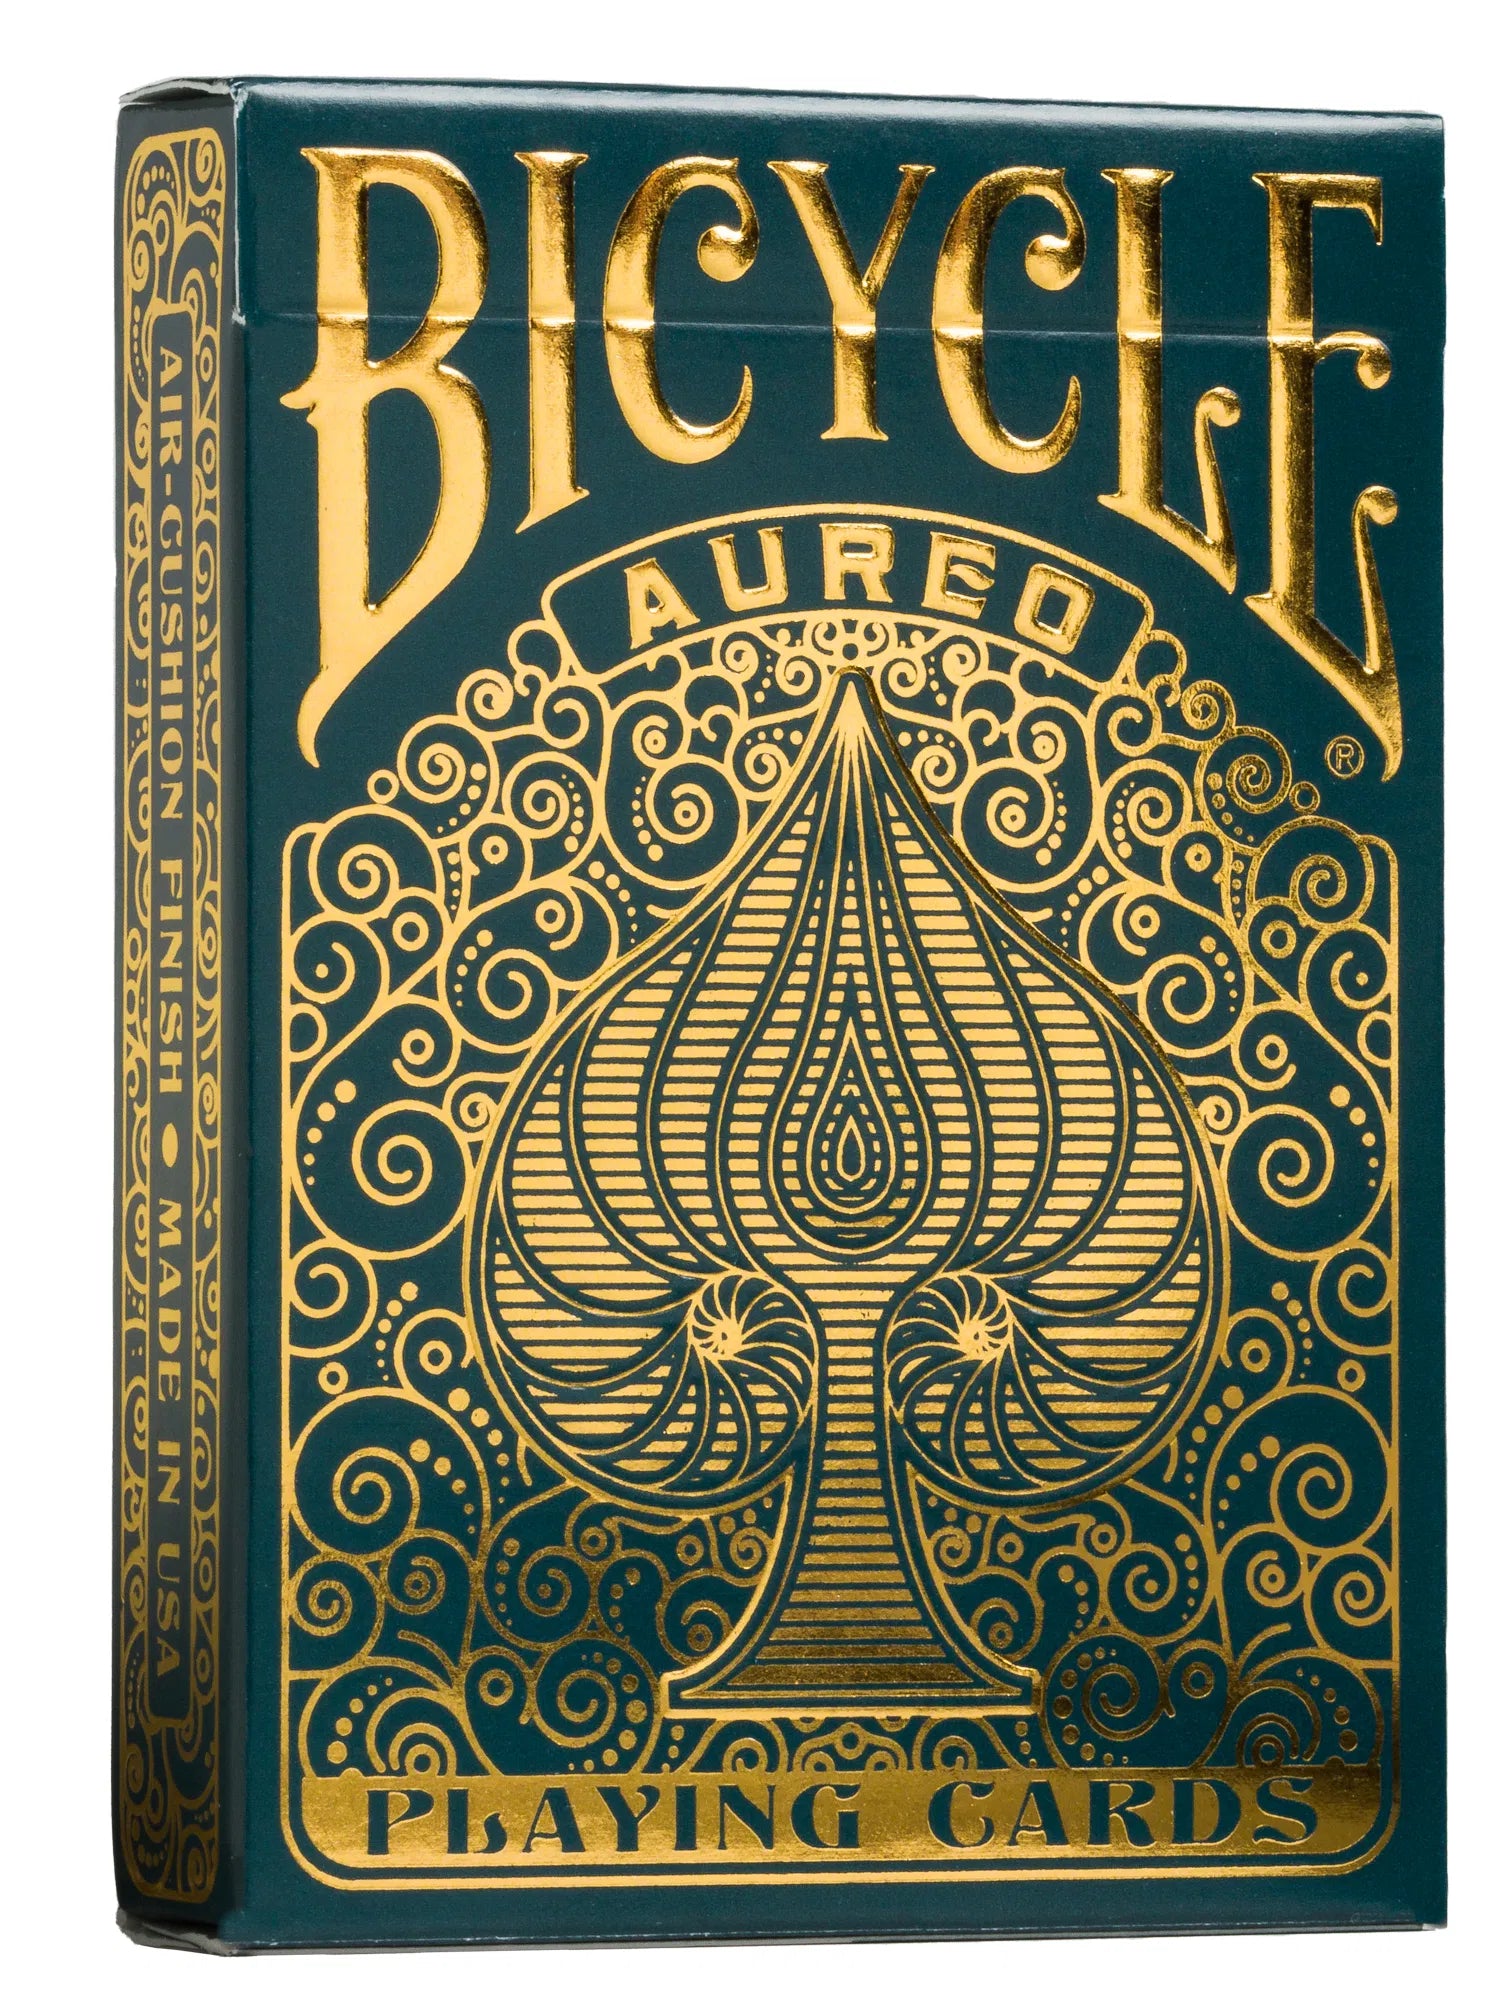 Bicycle - Aureo